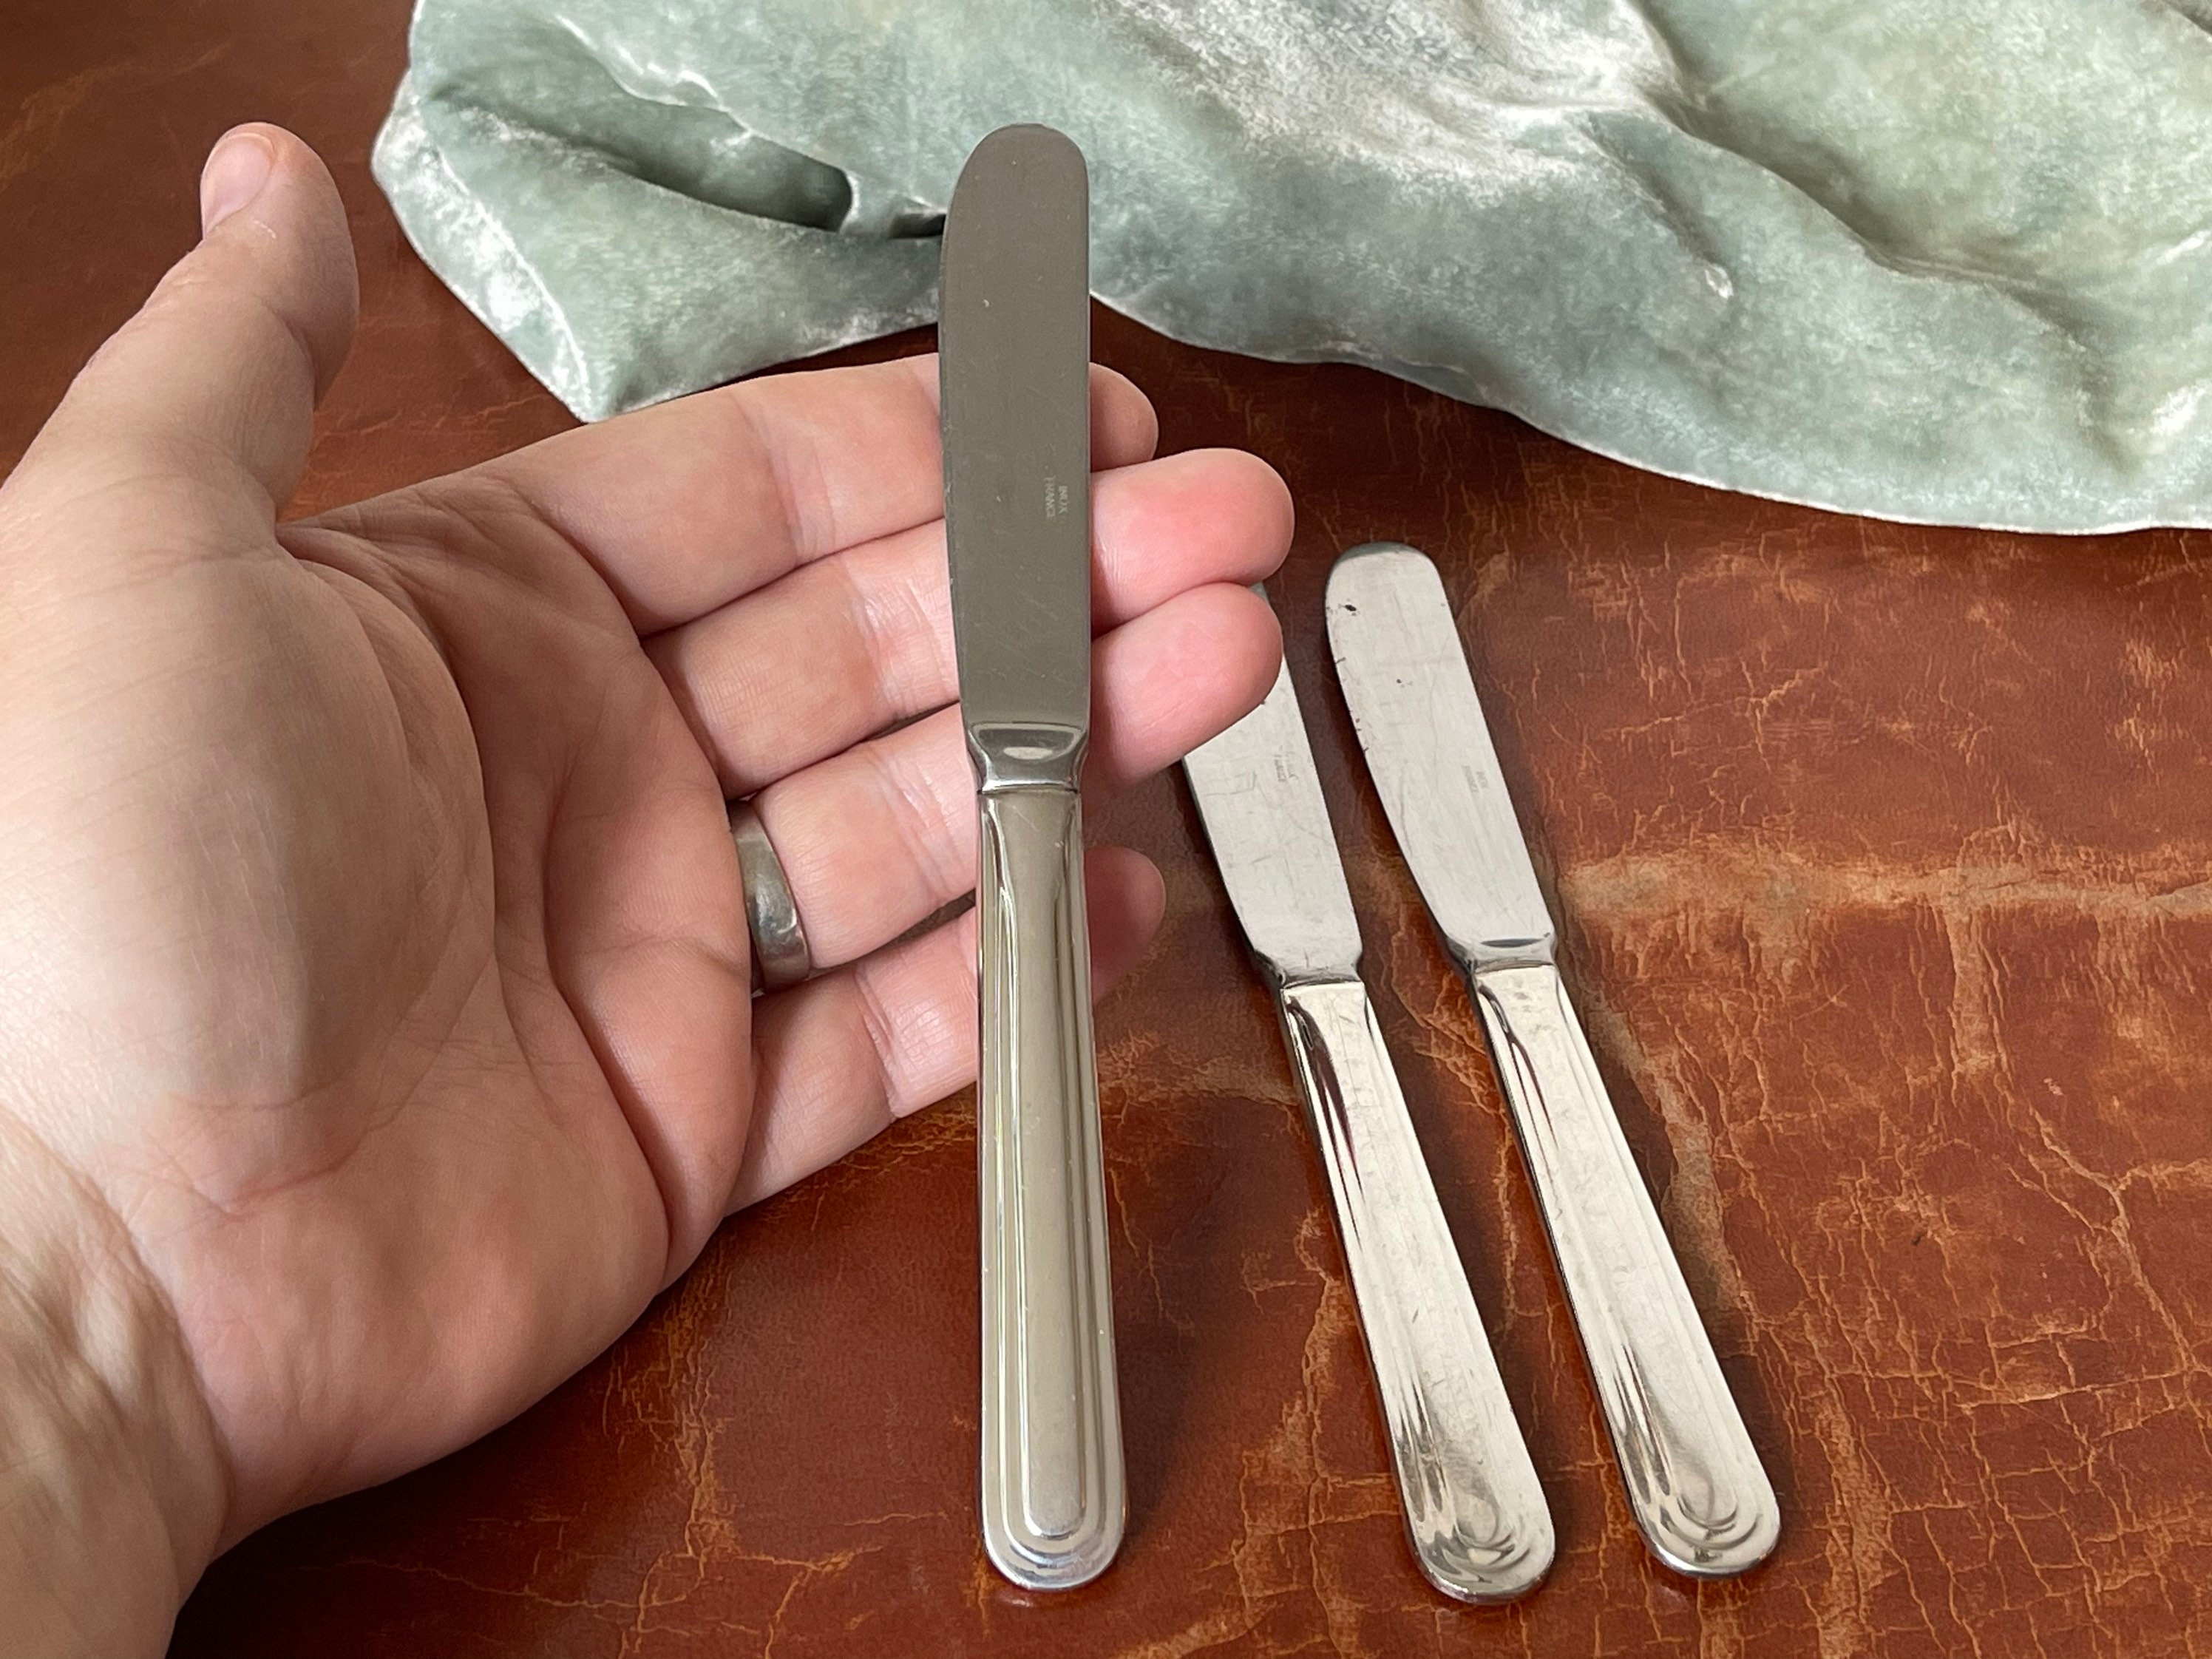 Guy Degrenne Inox France Silver Plate Knives Set of 3 Art Deco Design  French Flatware Designed by Guy Degrenne SI989 